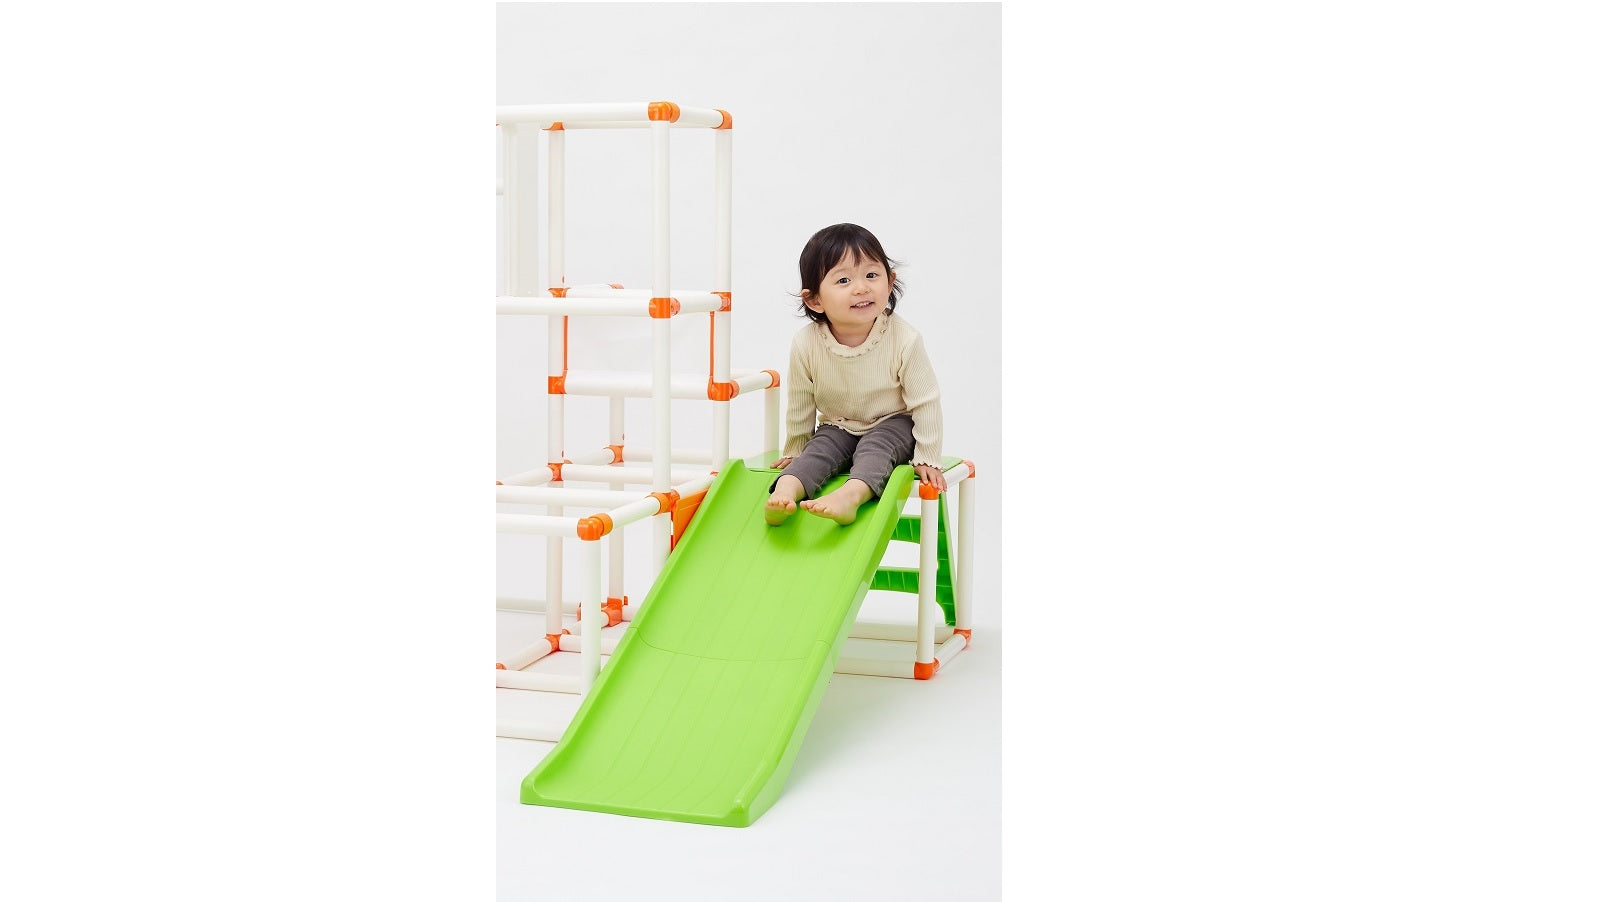 Nonaka Foldable 4 in 1 indoor Kids Park Slide Swing Jungle gym 